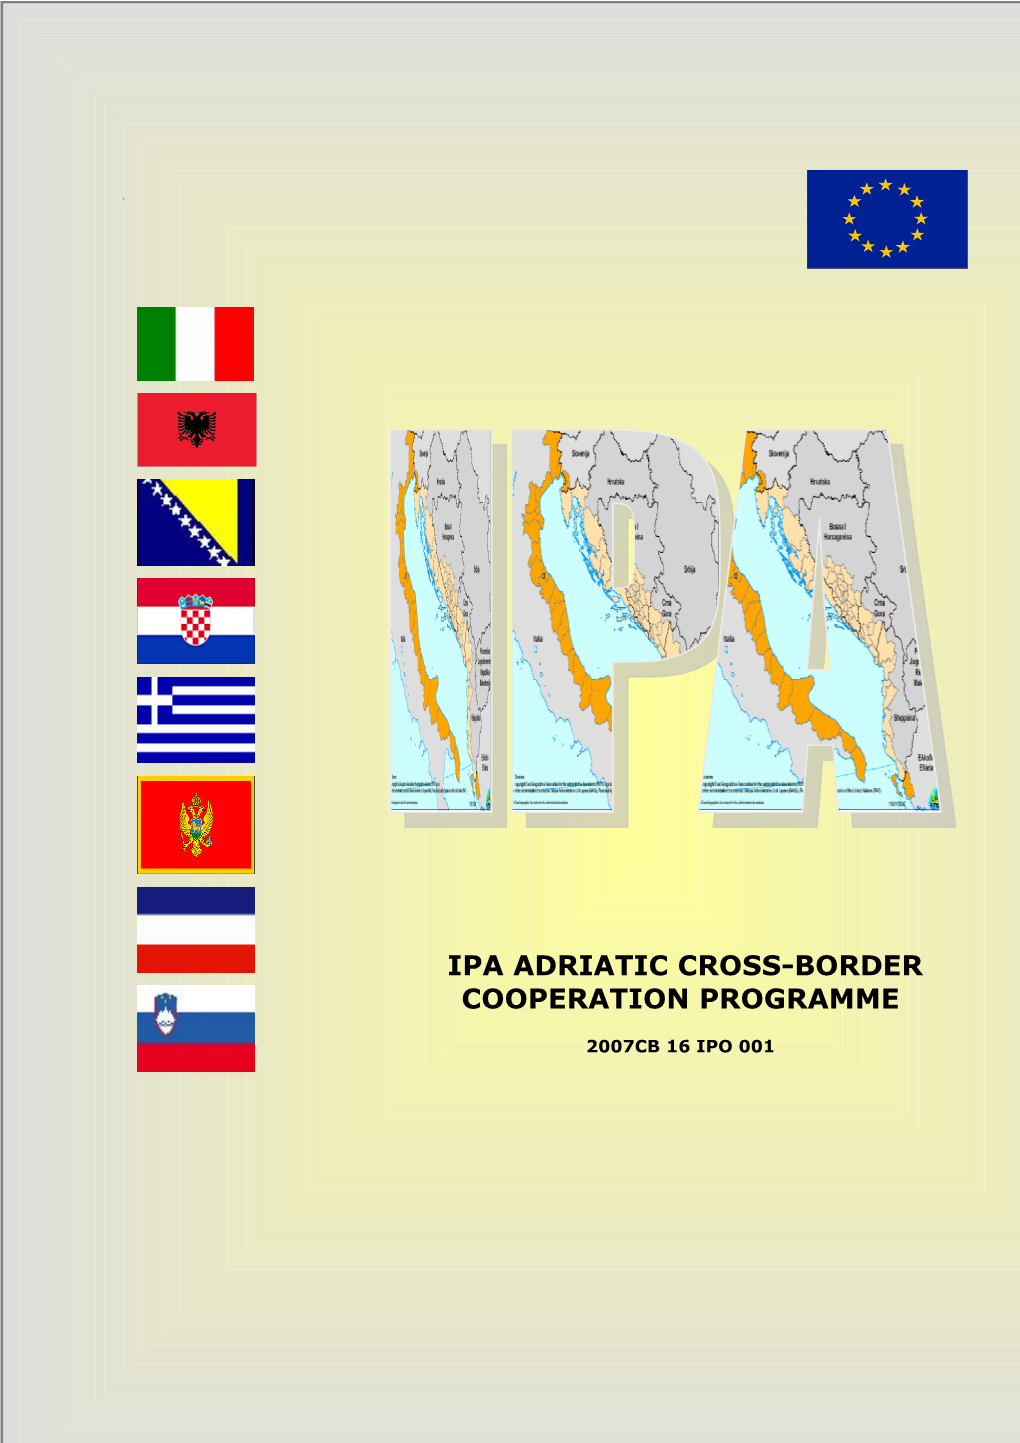 Ipa Adriatic Cross-Border Cooperation Programme